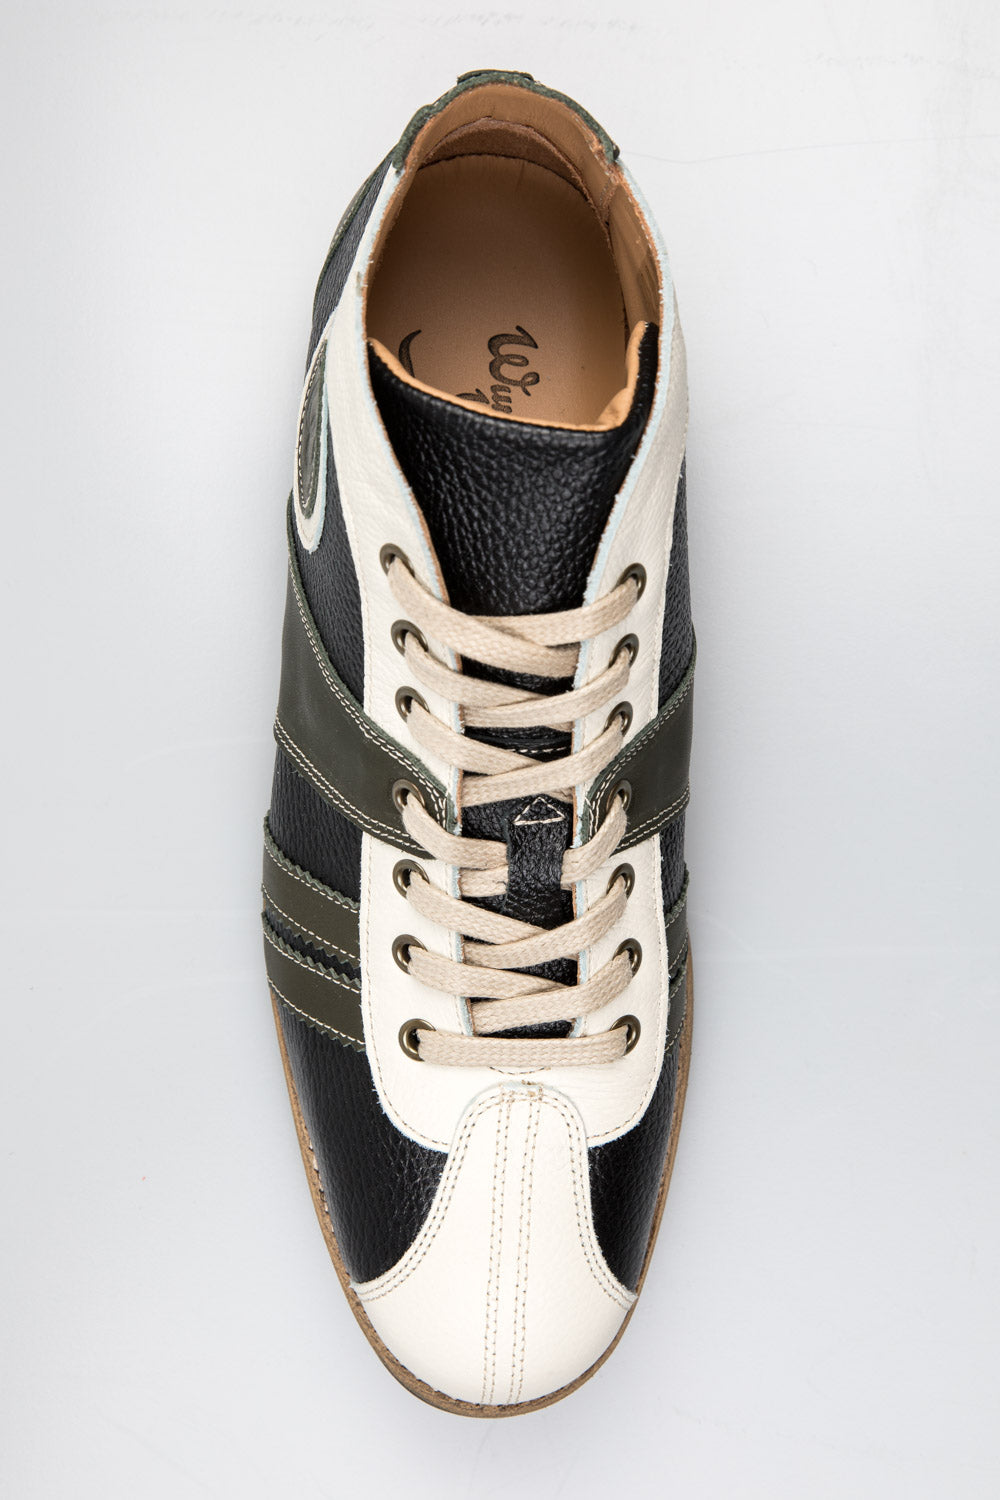 "The Racer" Retro Leder Sneaker - dunkelgrün/schwarz/weiß